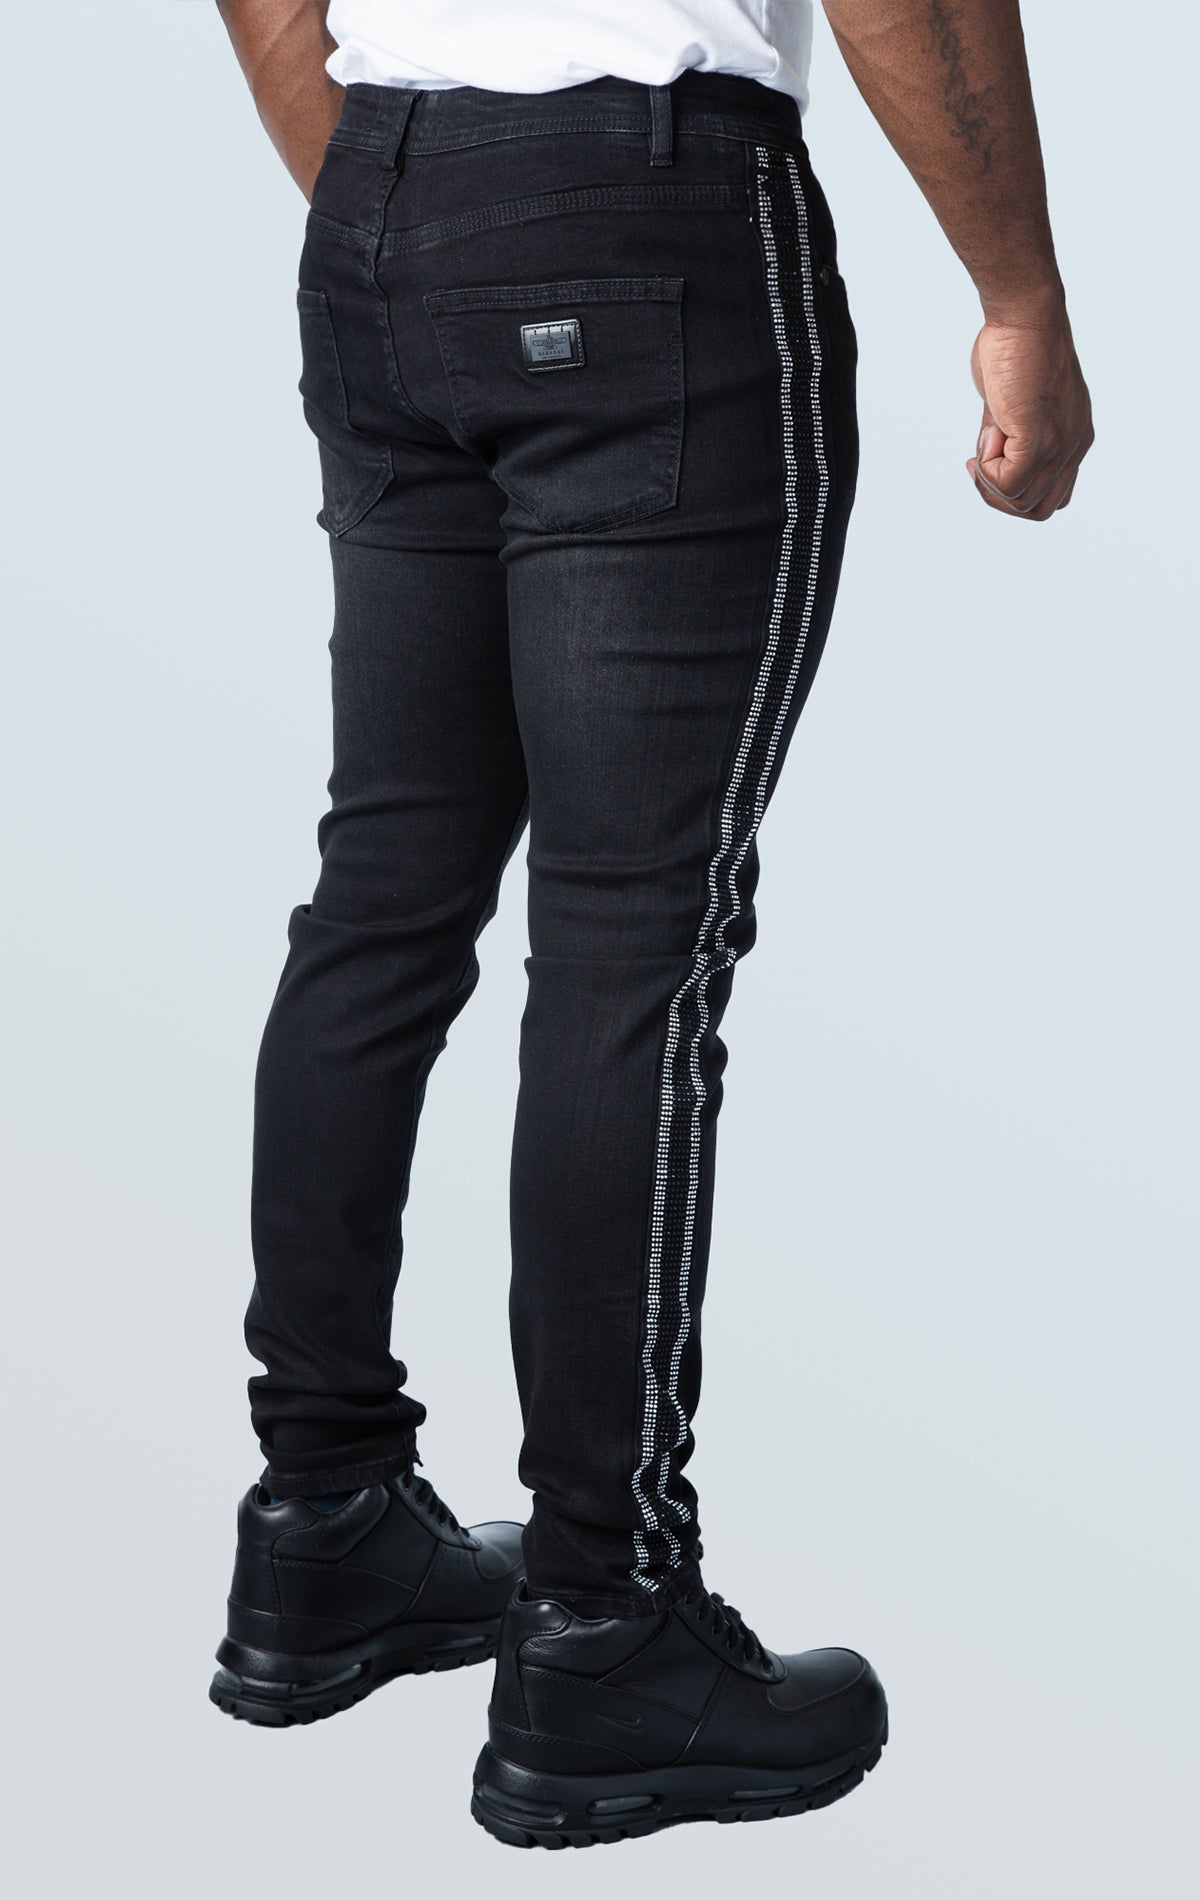 Black premium denim pants with unique side strip design.